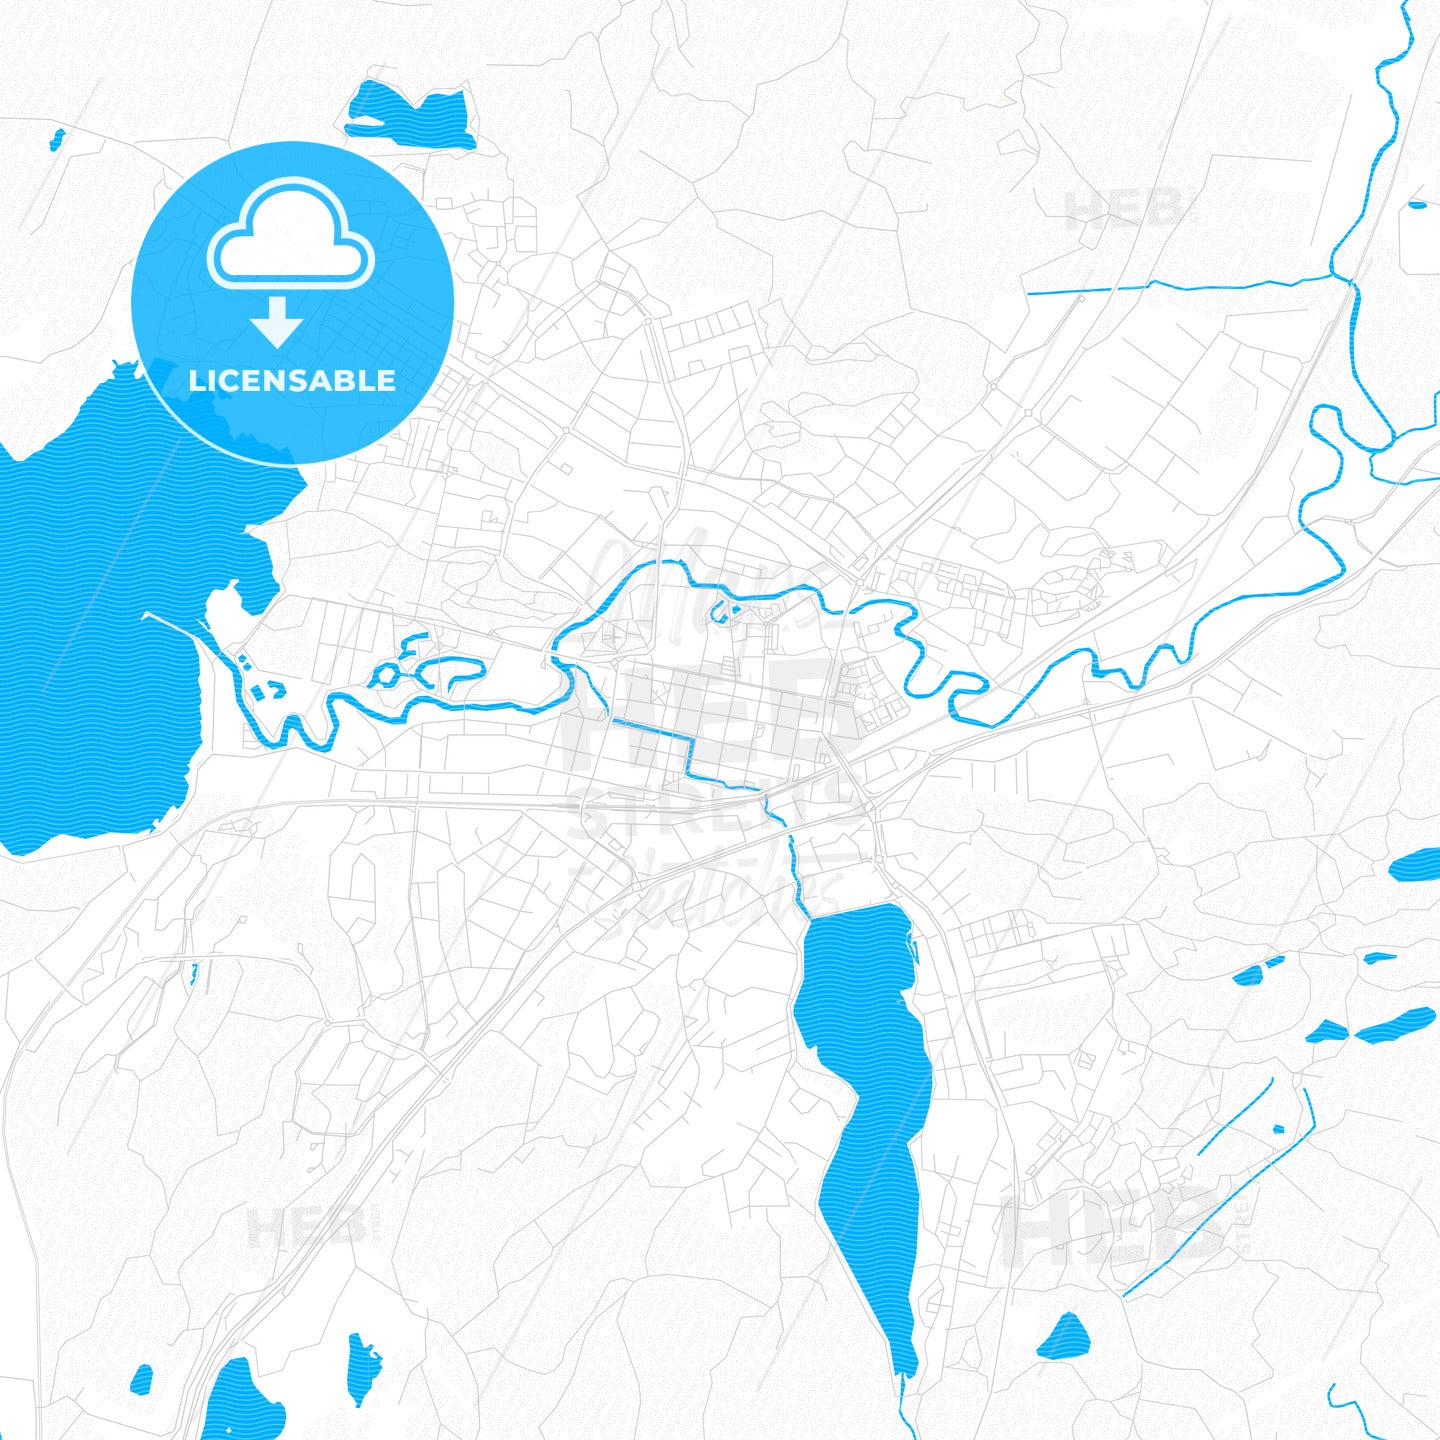 Alingsås, Sweden PDF vector map with water in focus